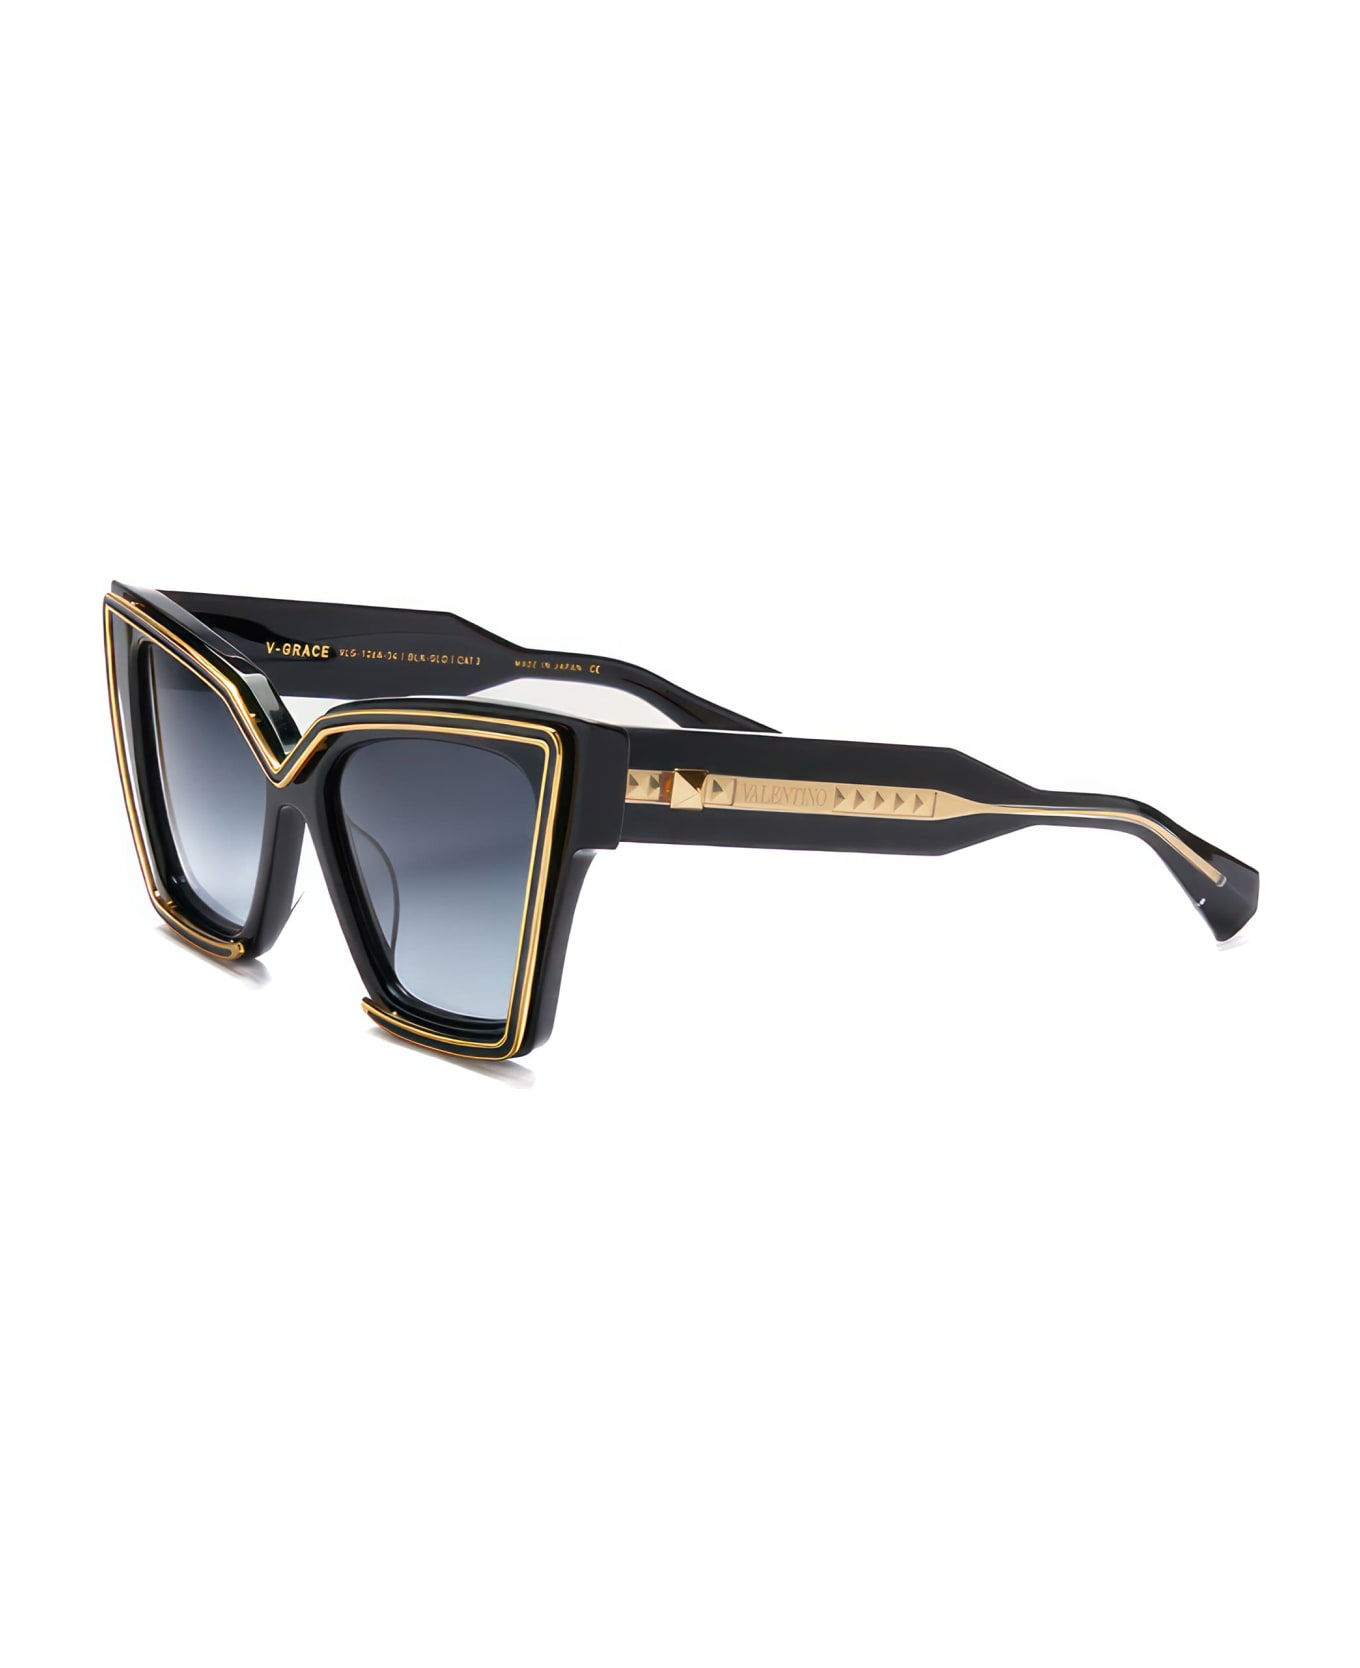 Valentino Eyewear V-grace - Black / Gold Sunglasses - Black サングラス